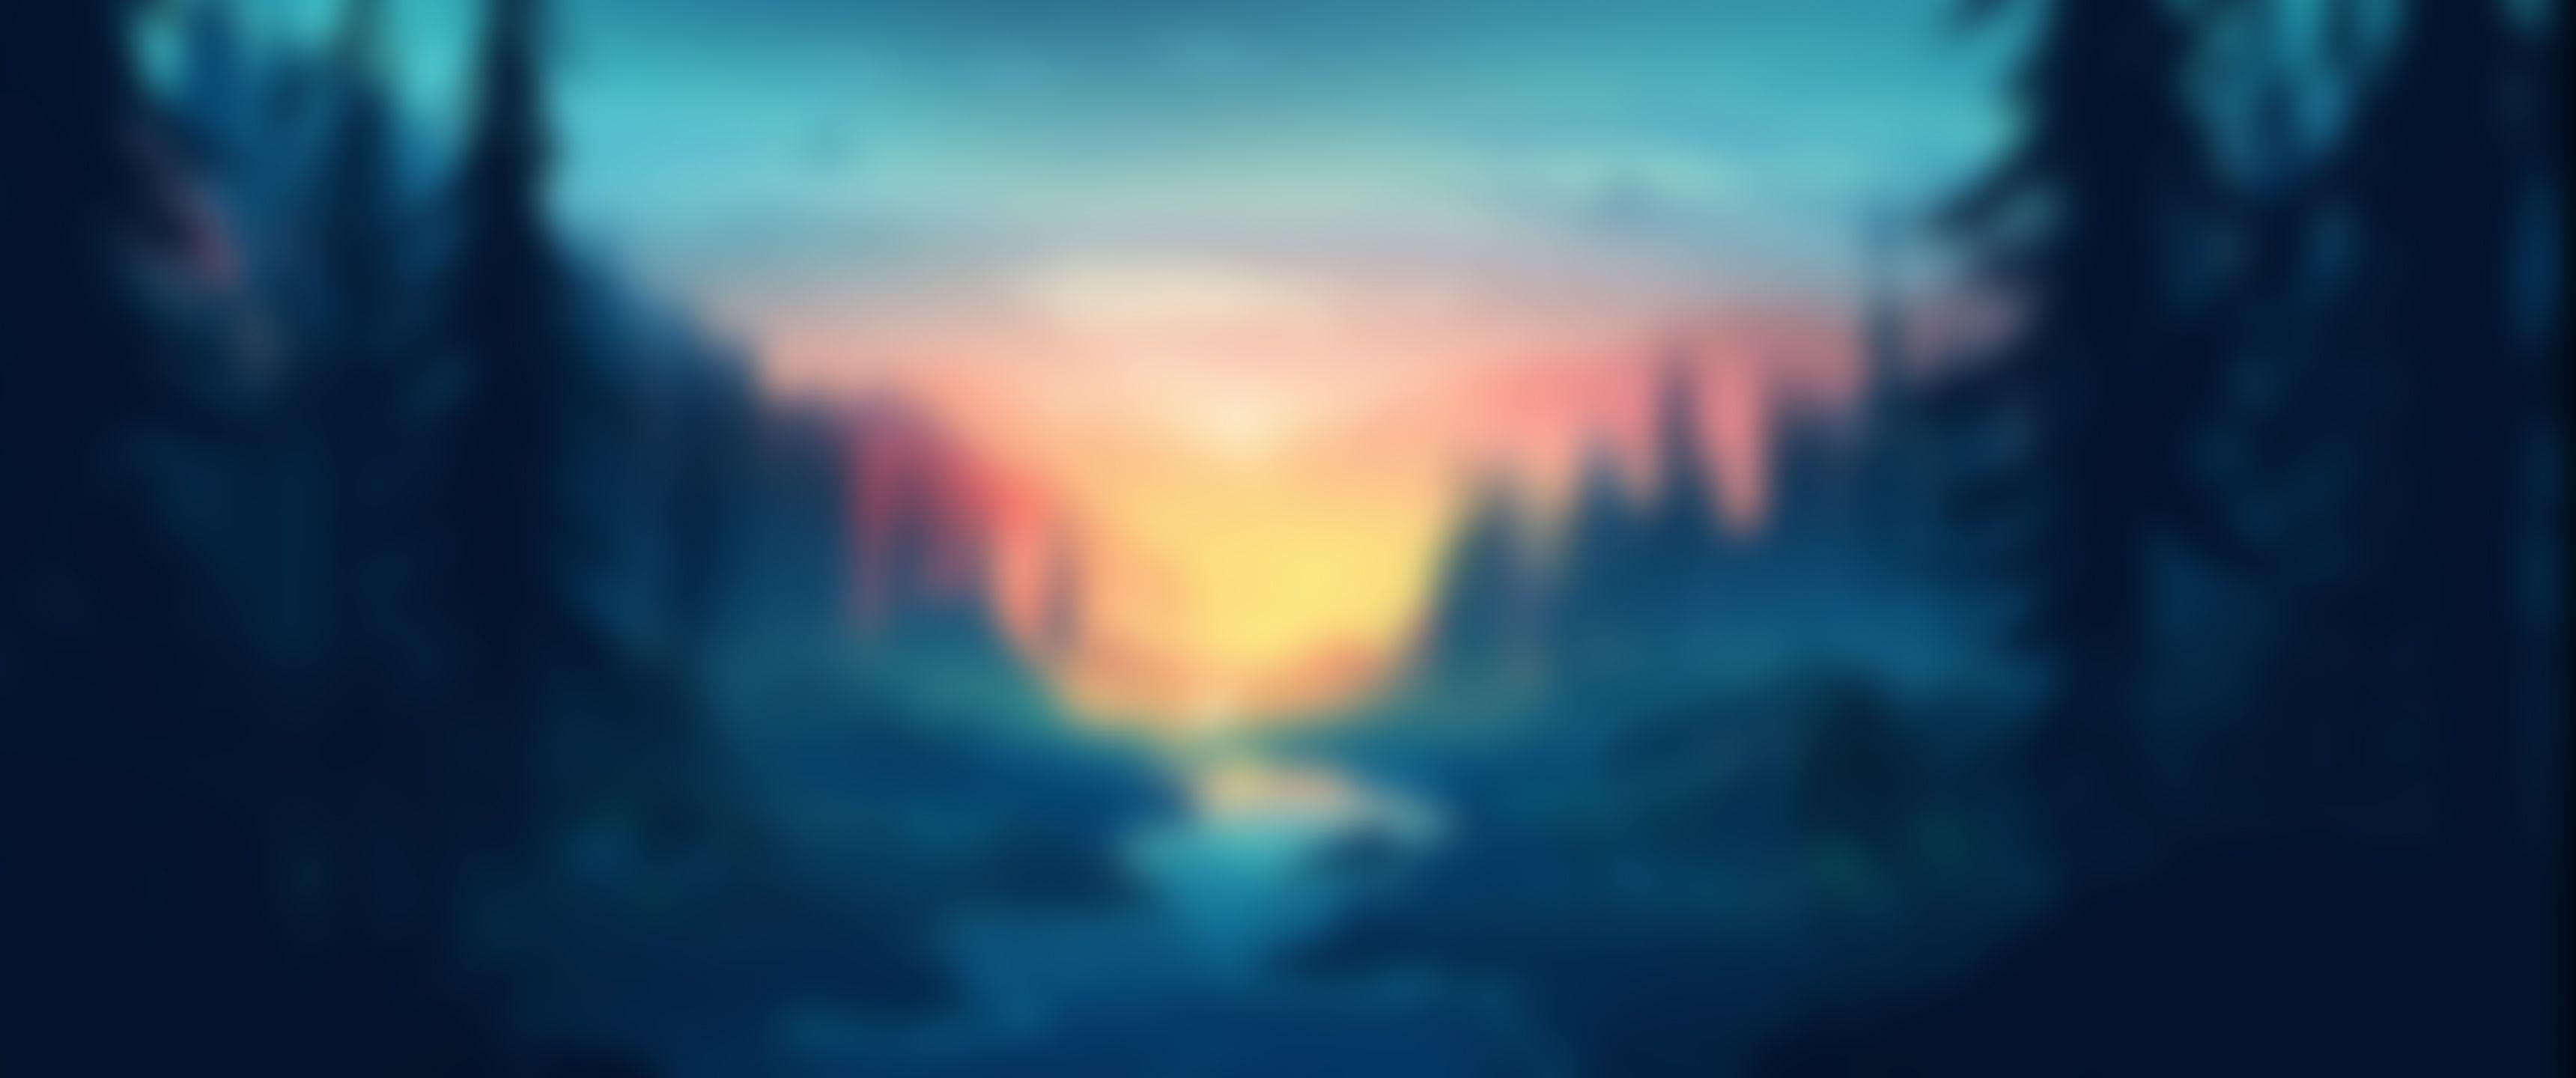 3440x1440 Dreamy Forest Blur Wallpaper Ultrawide - Blur Forest Free